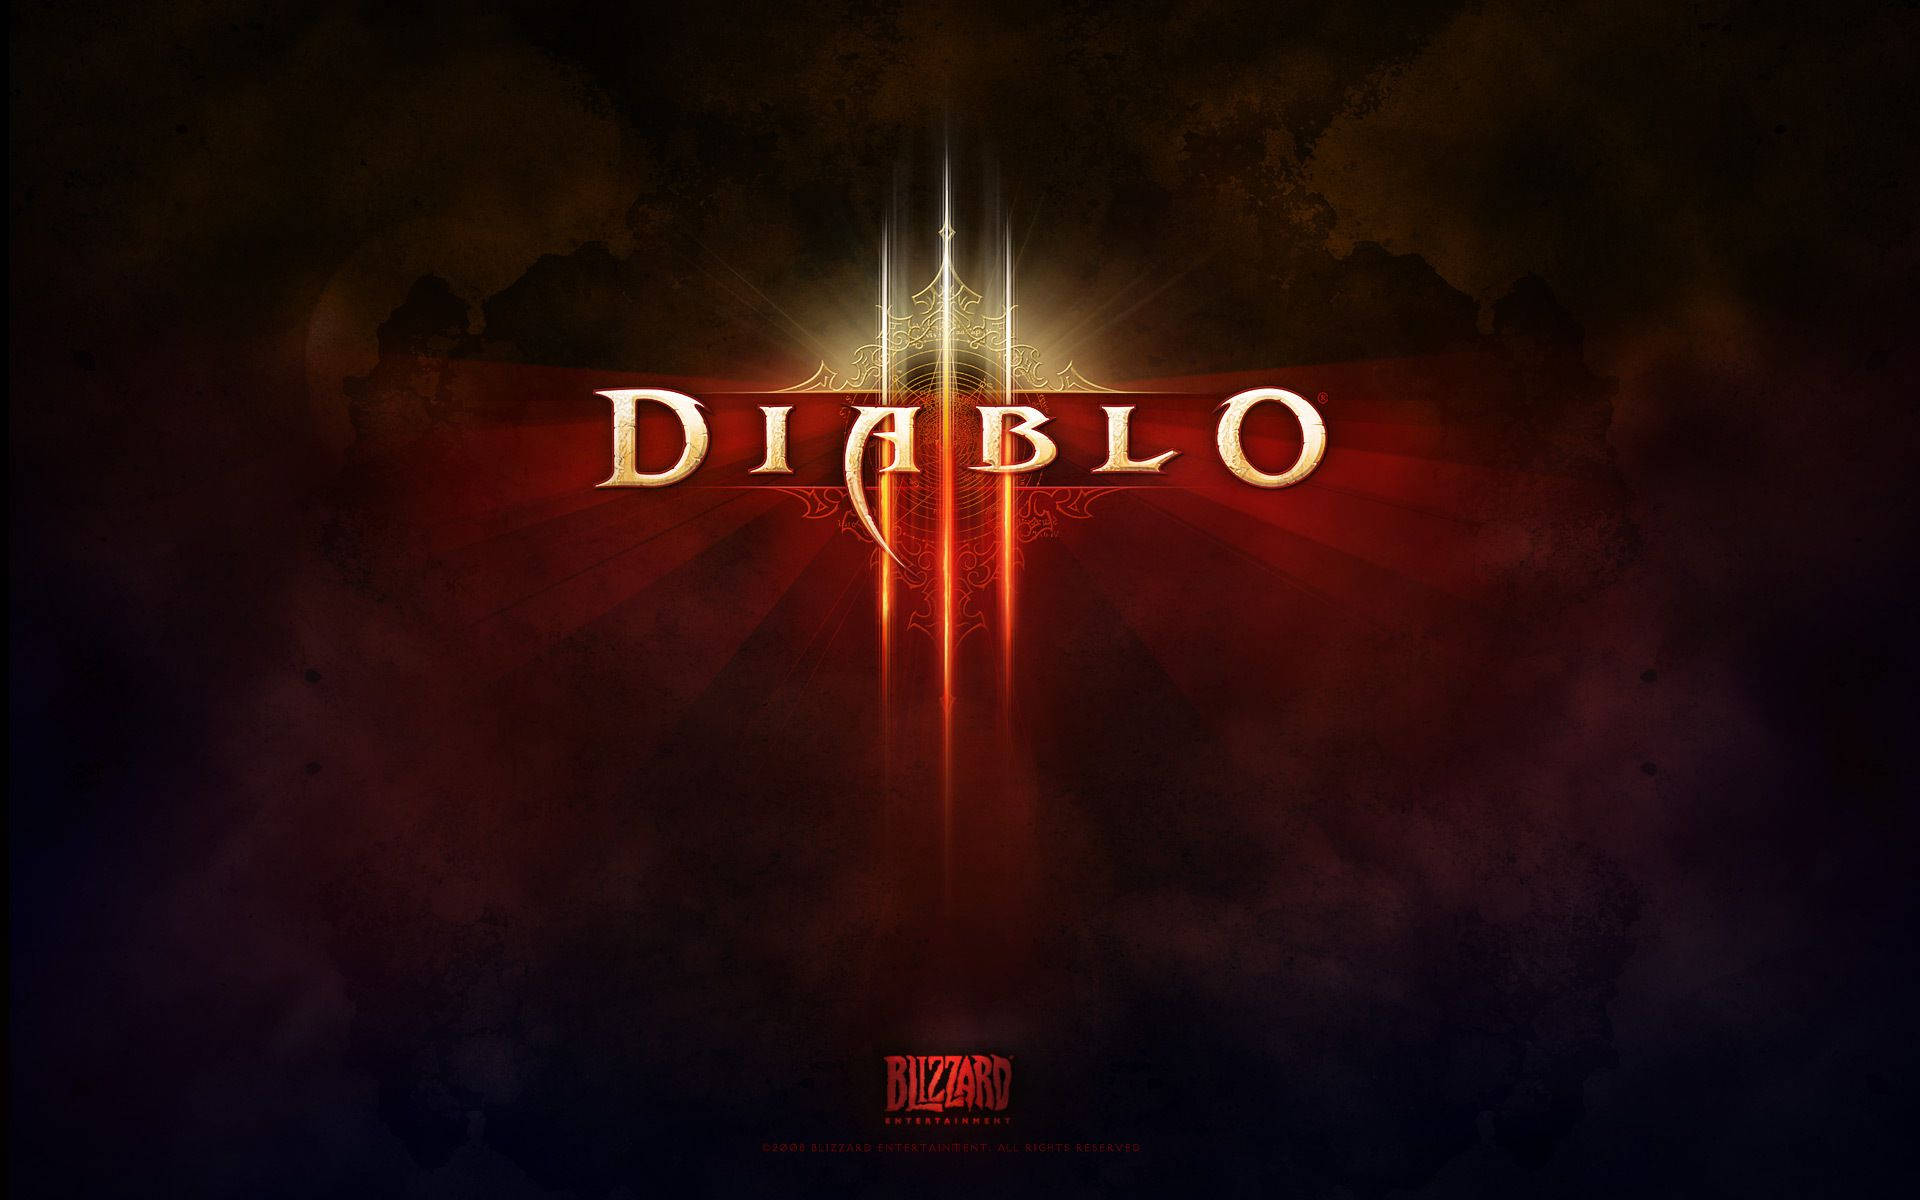 Diablo 3 Game Poster Background